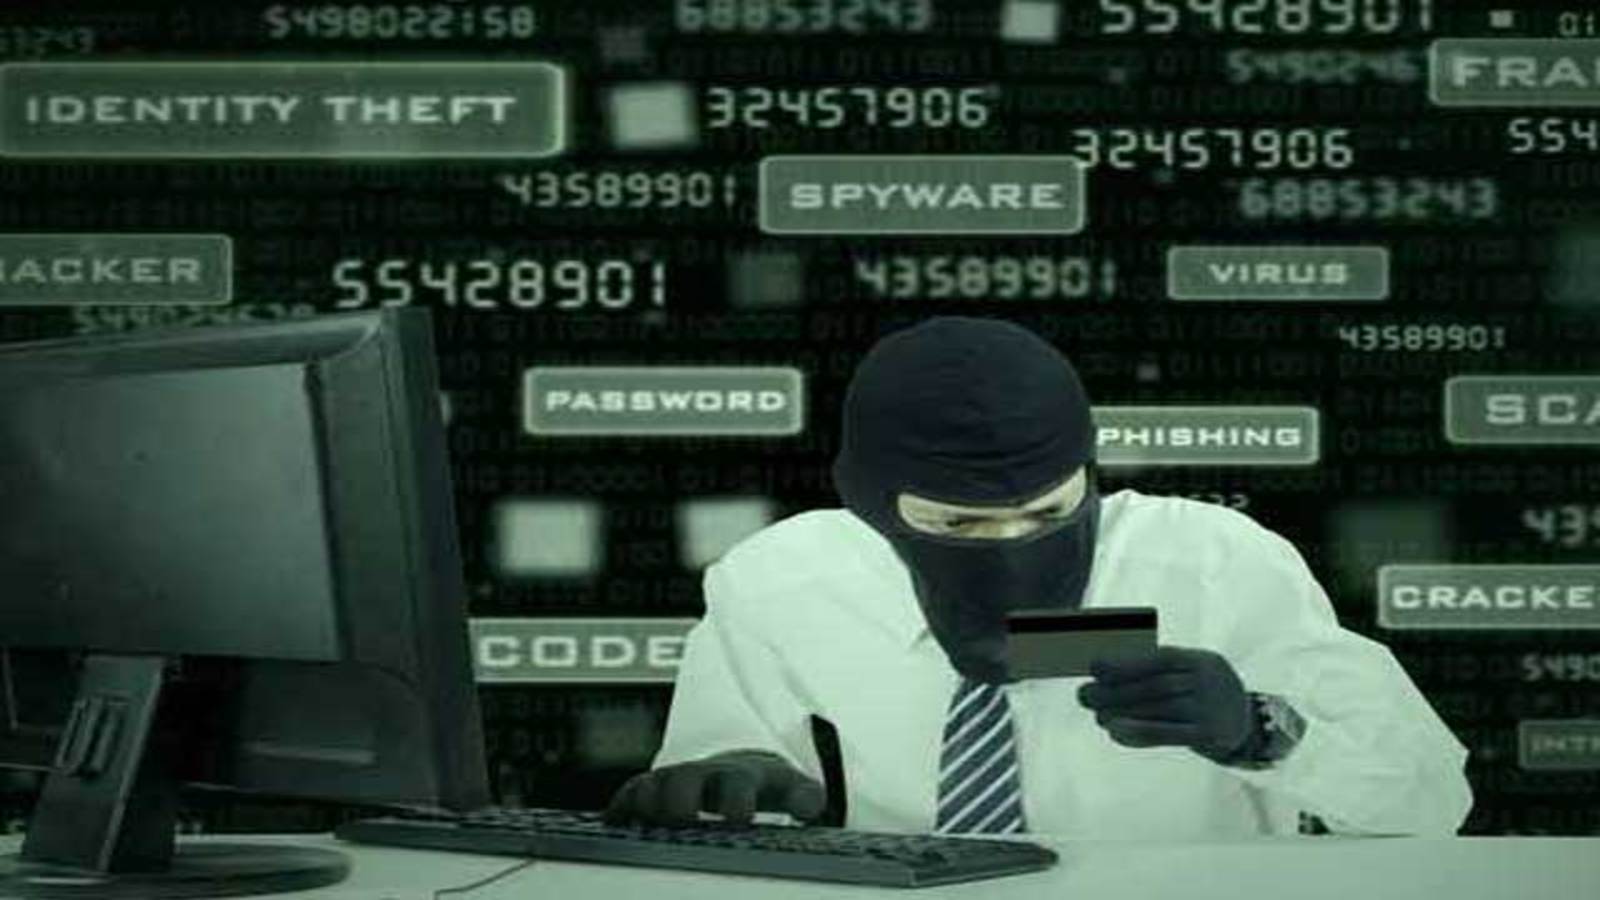 bank account hacked: Your bank account .economictimes.indiatimes.com